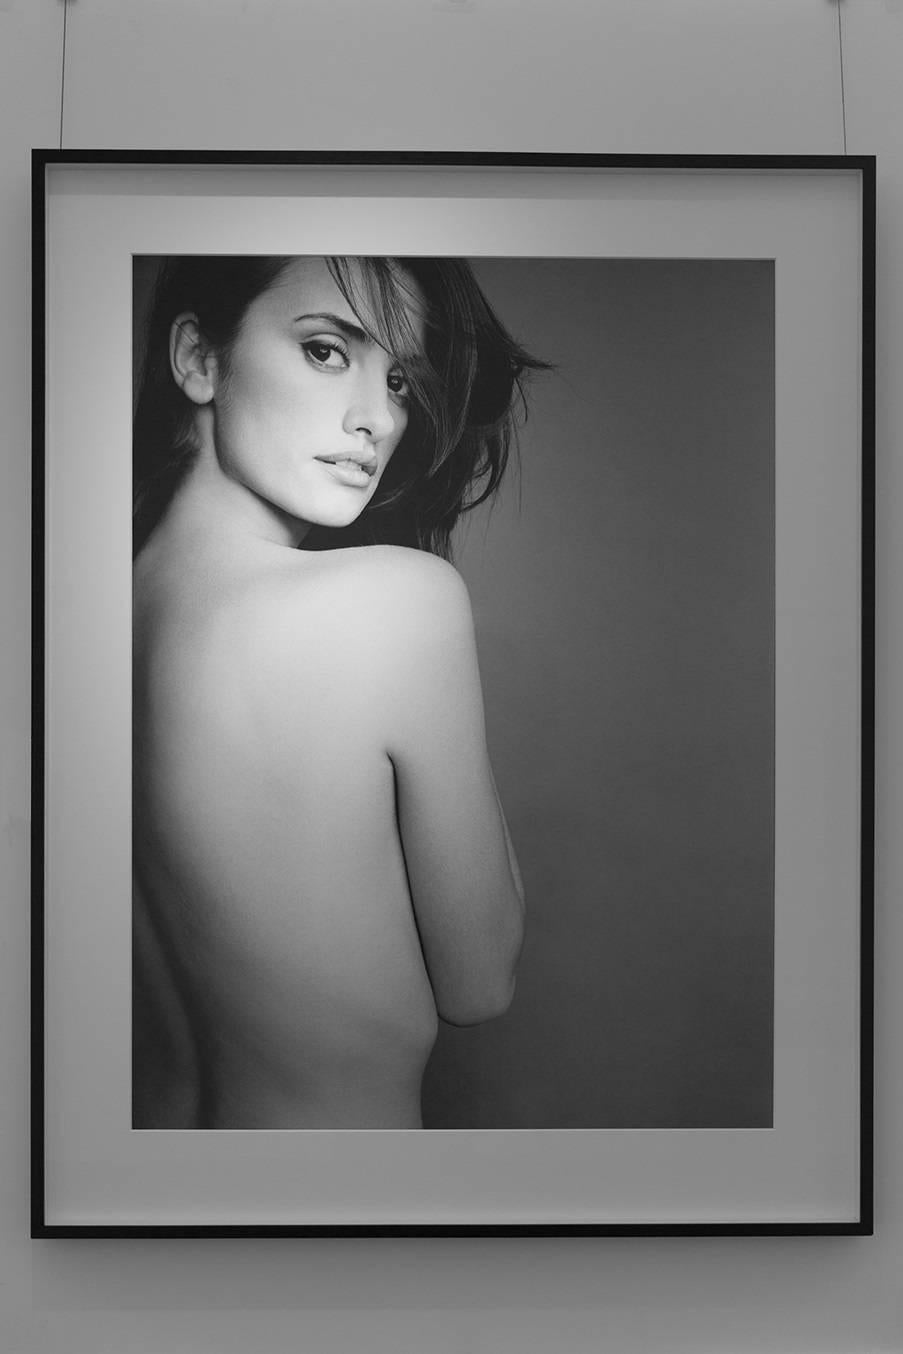 Penelope Cruz - nude portrait of the film star and model - Photograph by Antoine Verglas